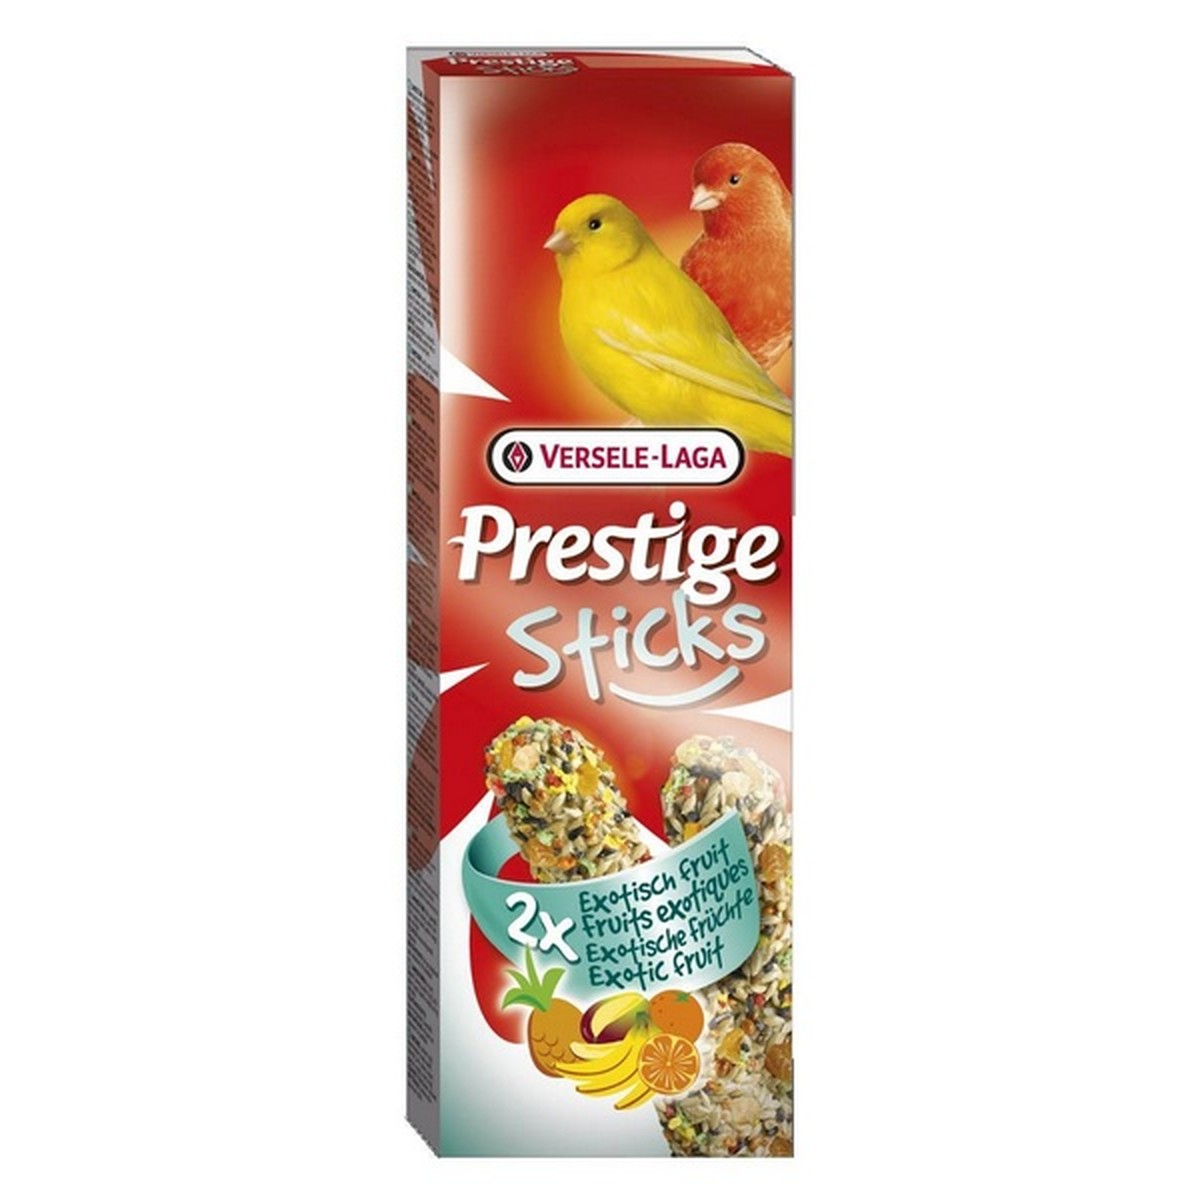   Prestige Sticks Canaris Fruits Exoti. 2 pces. 60g  60g